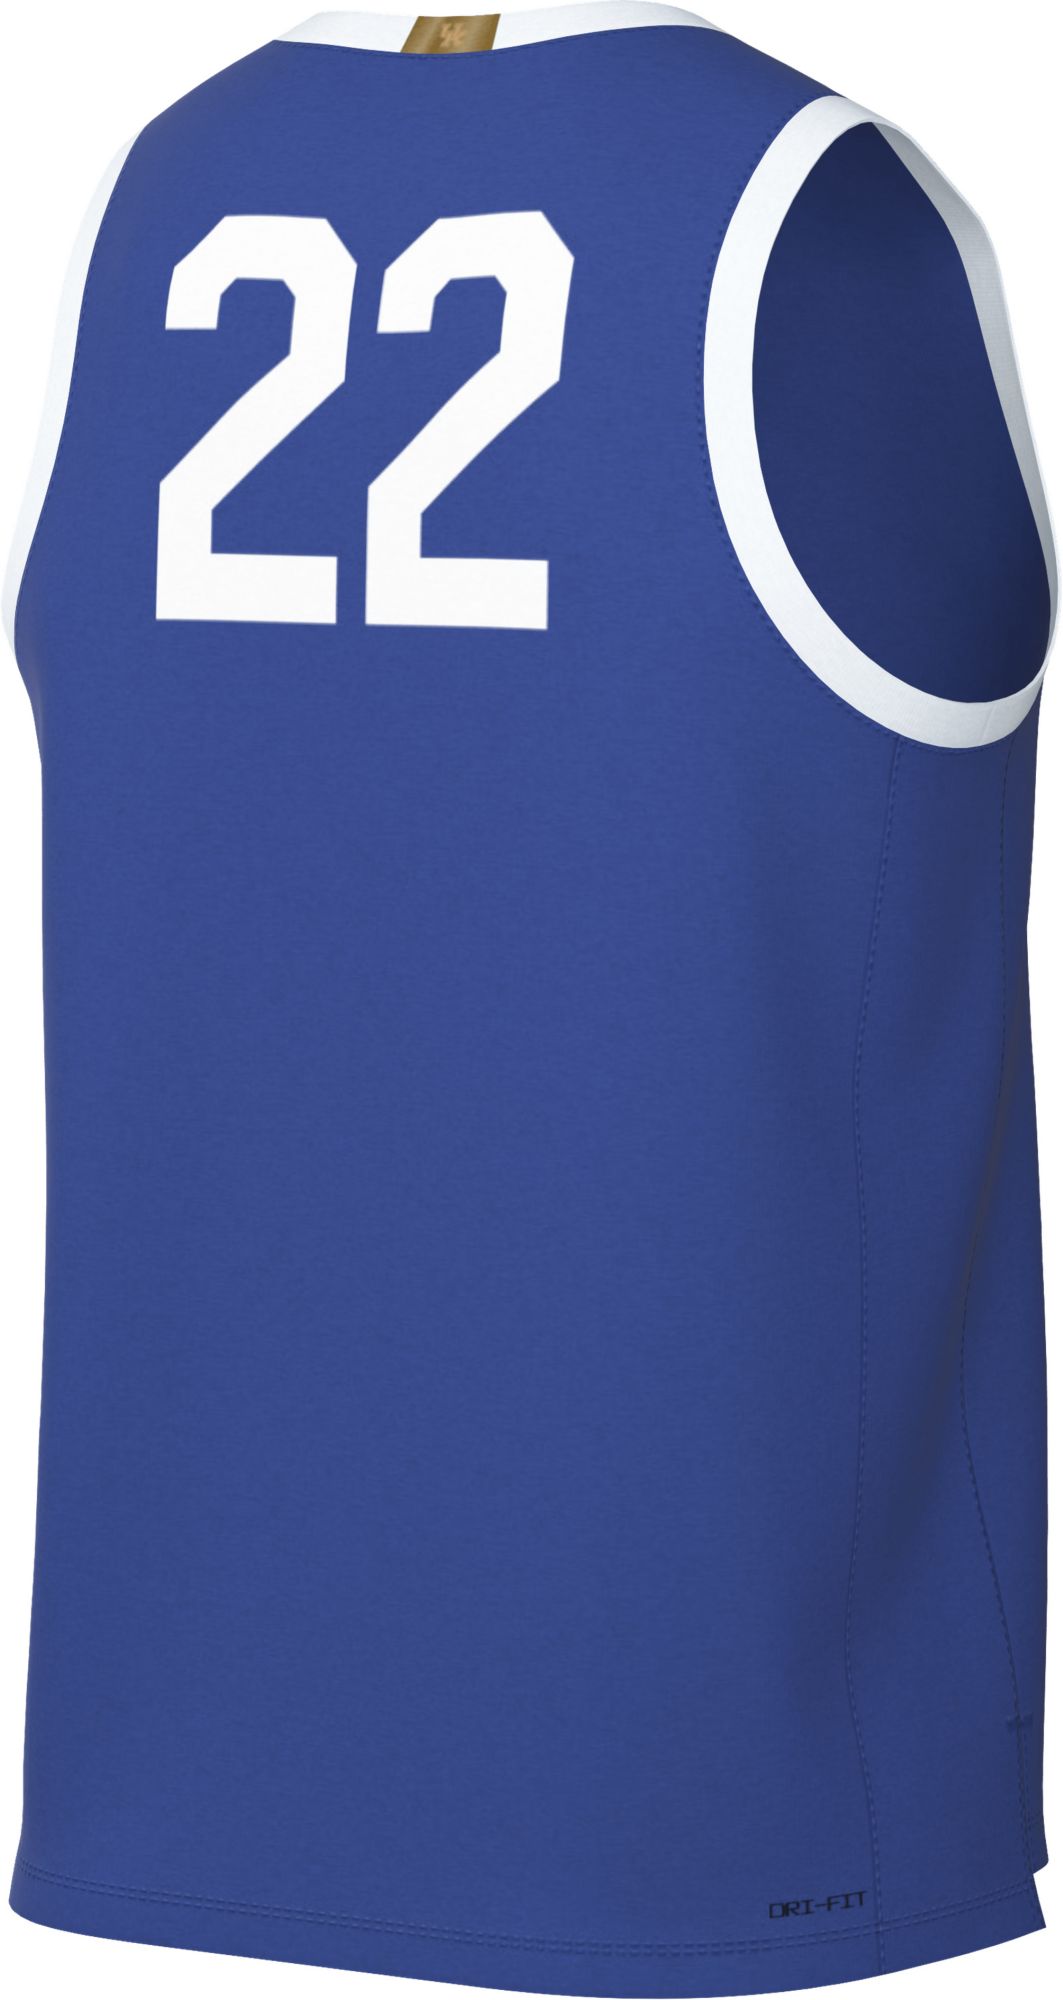 Dick's Sporting Goods Nike Men's Kentucky Wildcats #22 Blue 